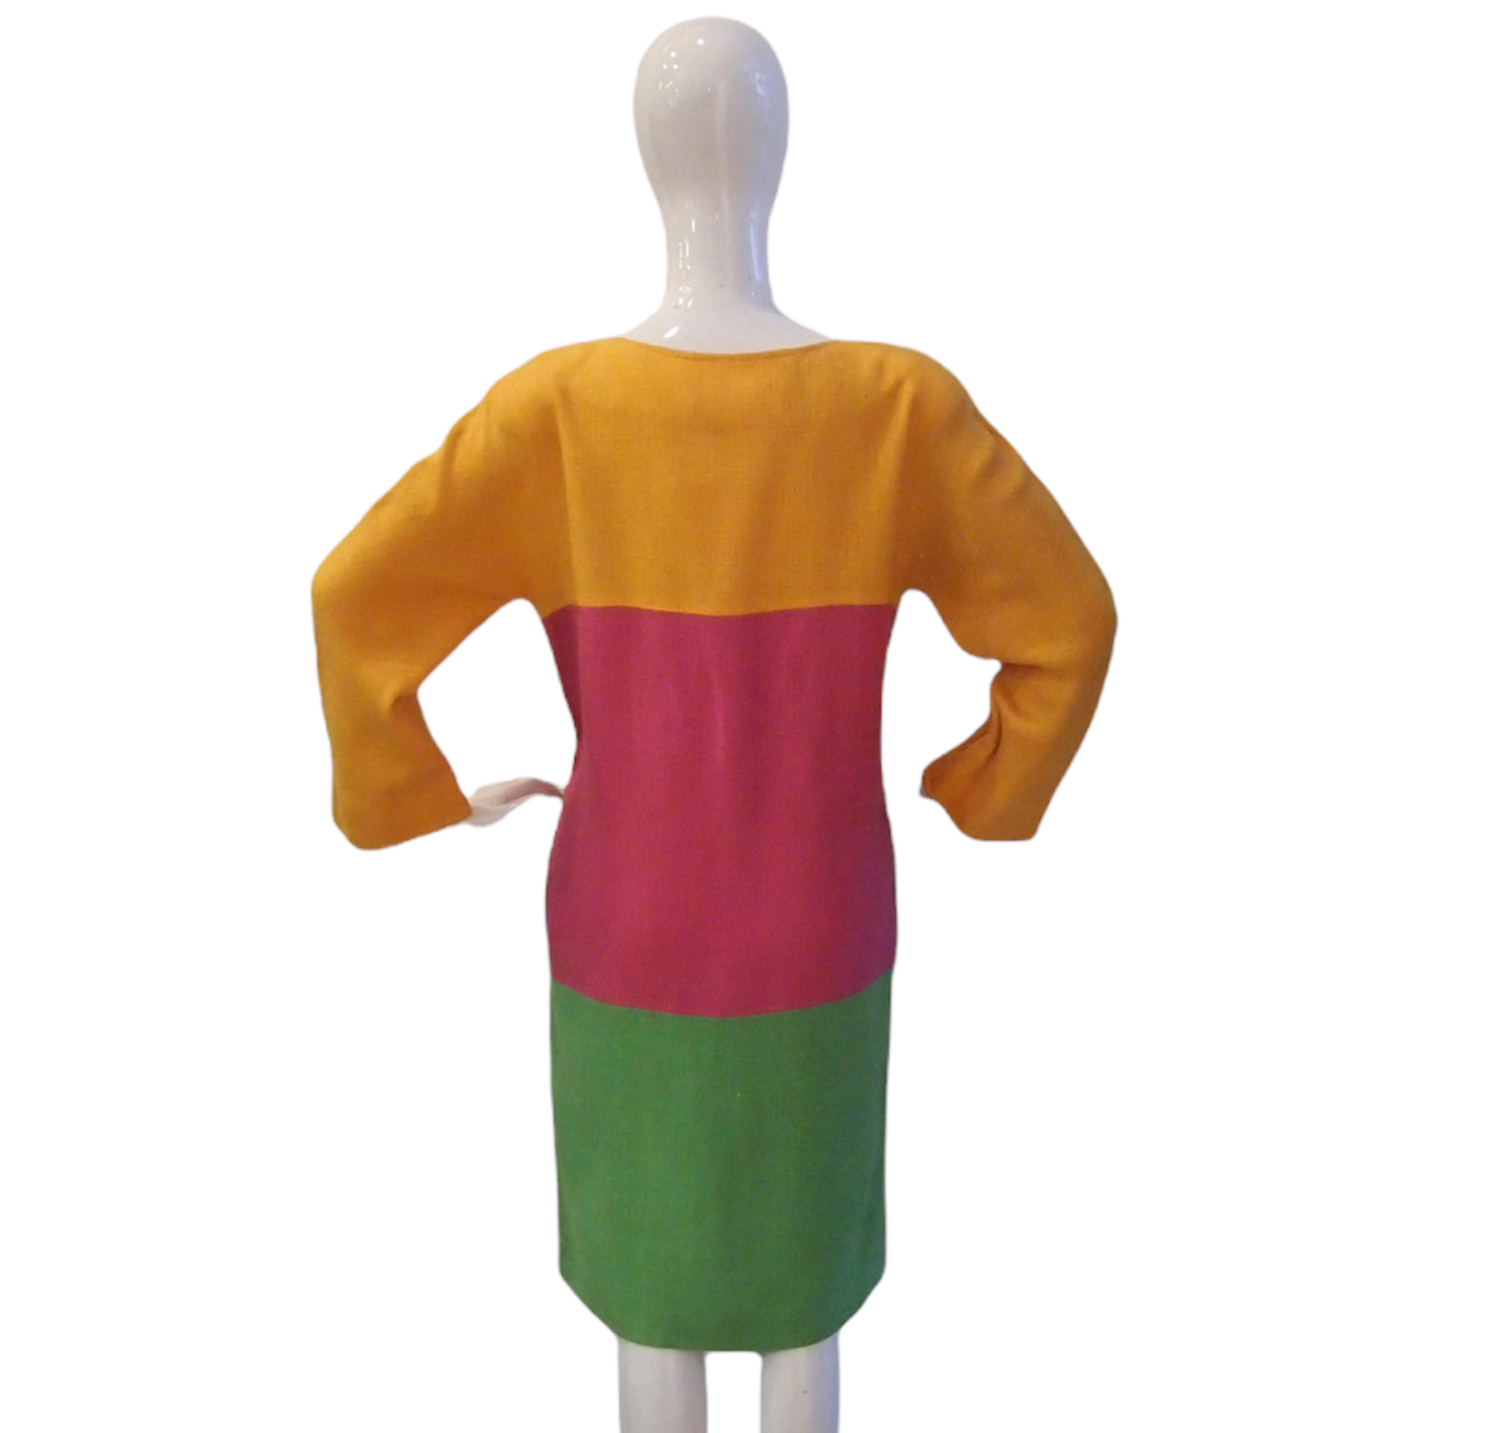 Vintage Oscar De La Renta Funky Colorblock Dress